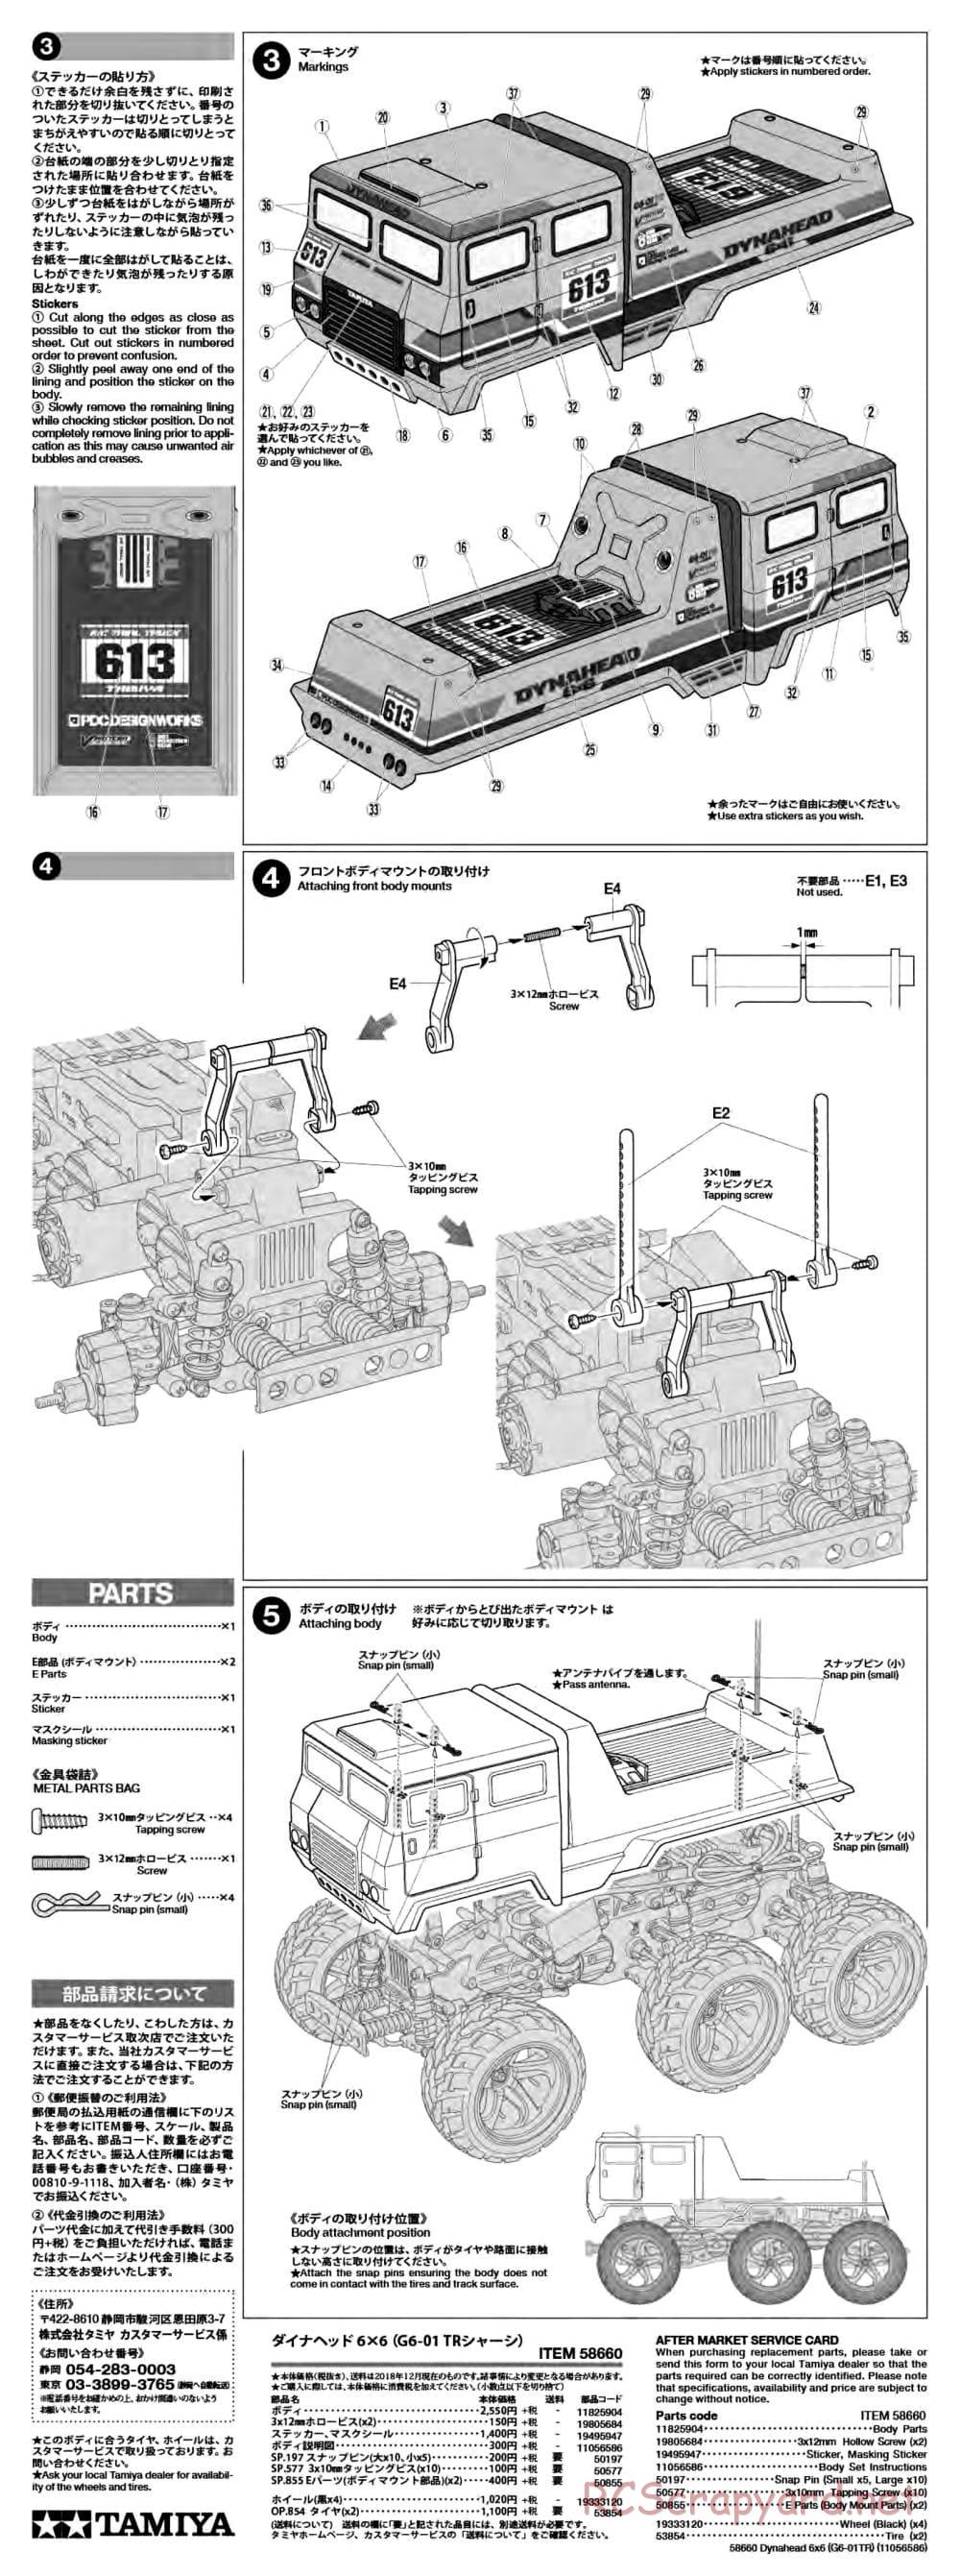 Tamiya - Dynahead 6x6 - G6-01TR Chassis - Manual - Page 2